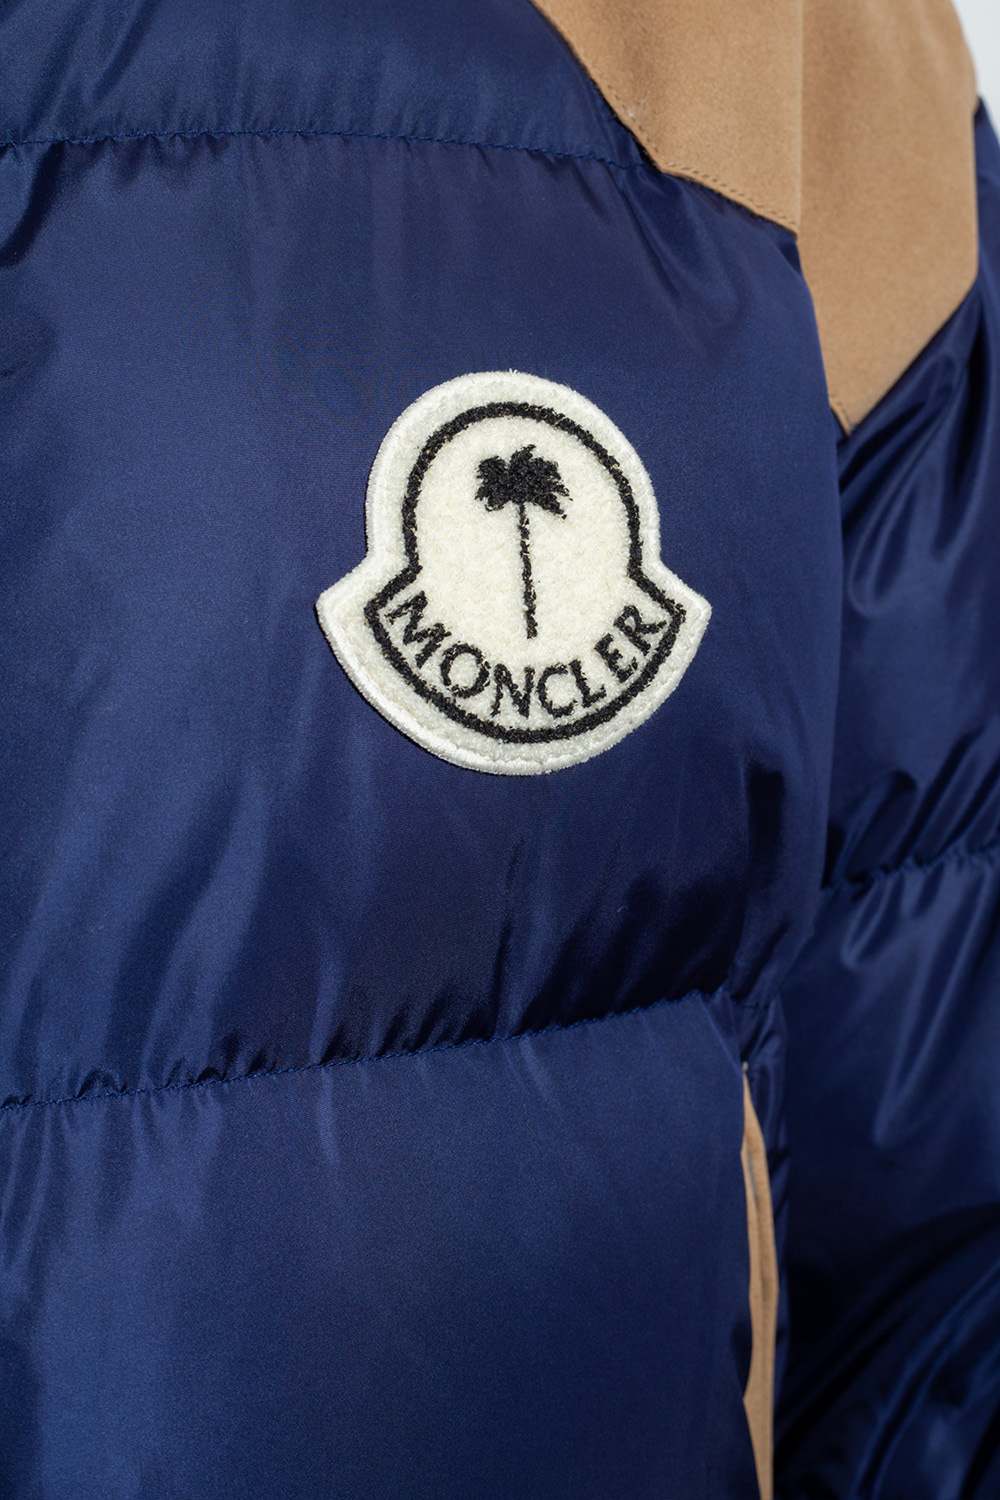 Buy Moncler Genius x Palm Angels Monogram Sweatshirt 'Blue' - 8G00011 M2513  730